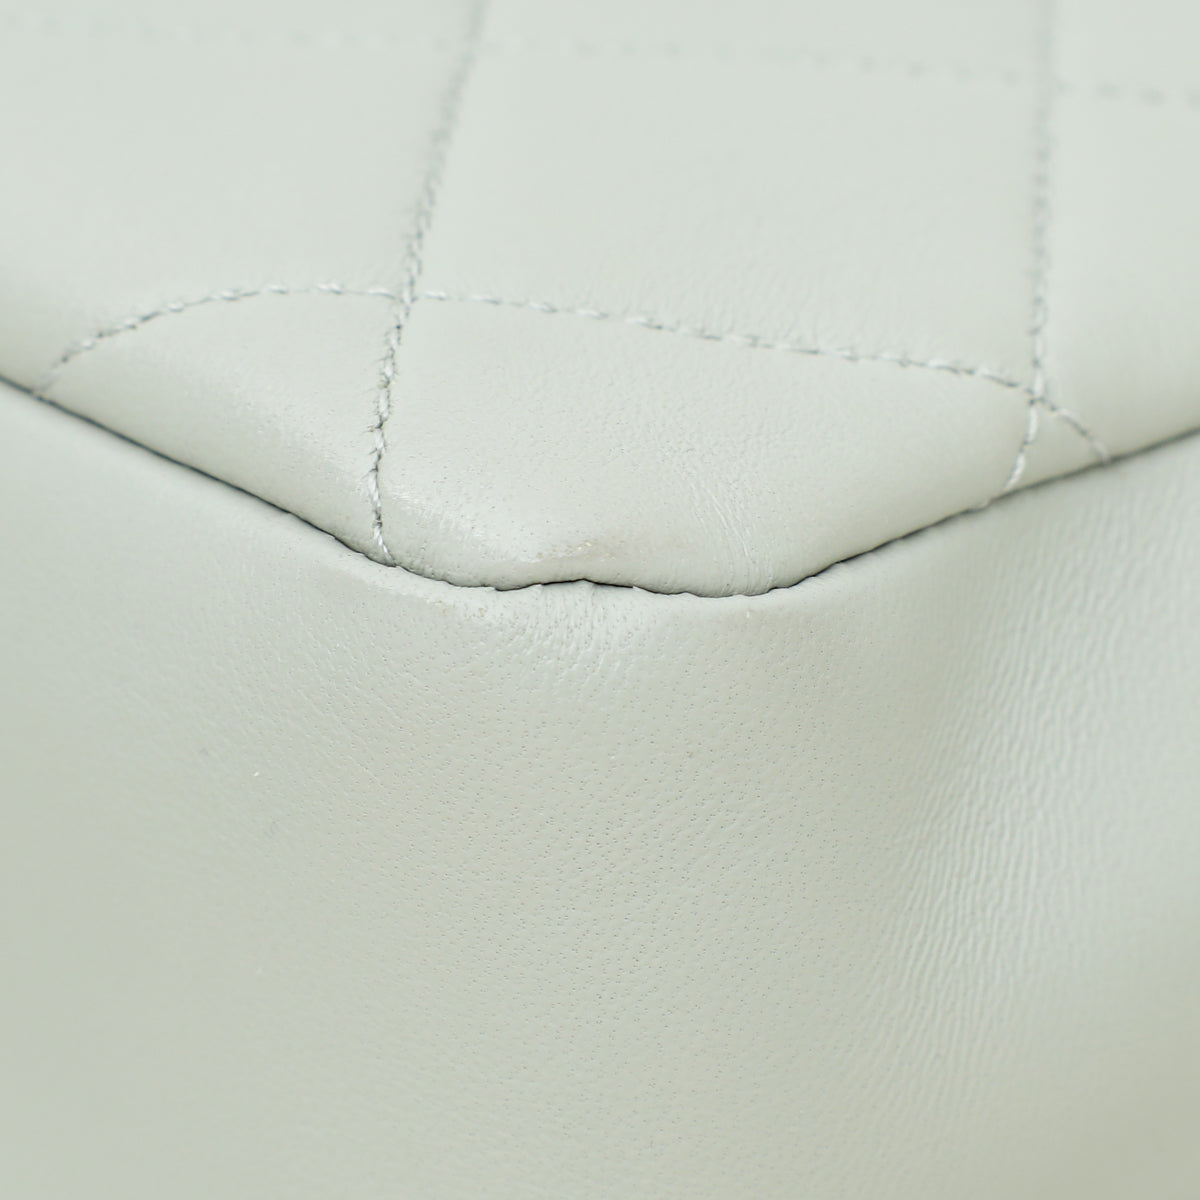 Chanel Grey CC Resin Bi-Color Chain Flap Bag